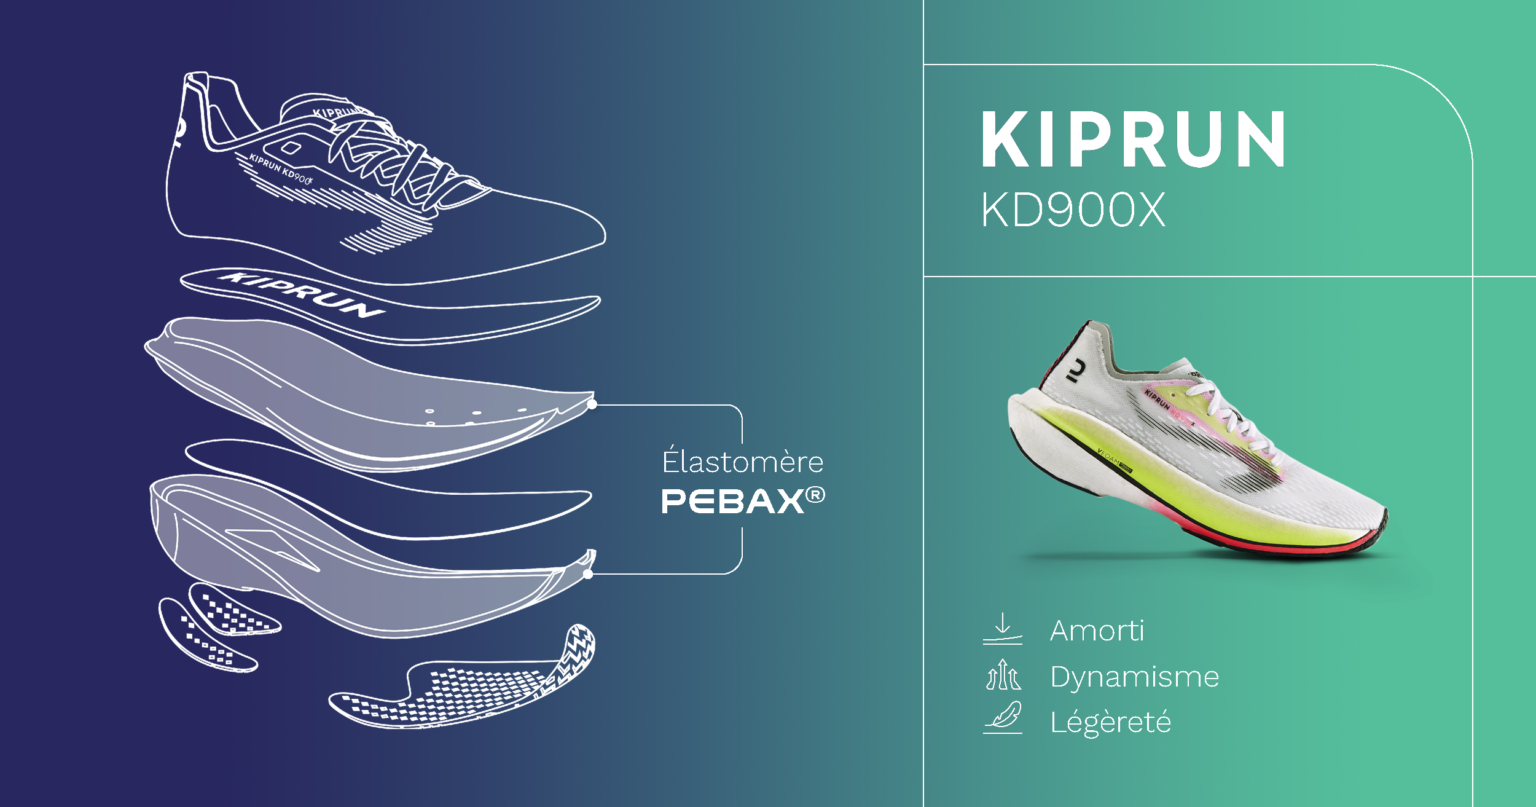 Kiprun’s new KD900X performance running shoe rely on Arkema’s Pebax